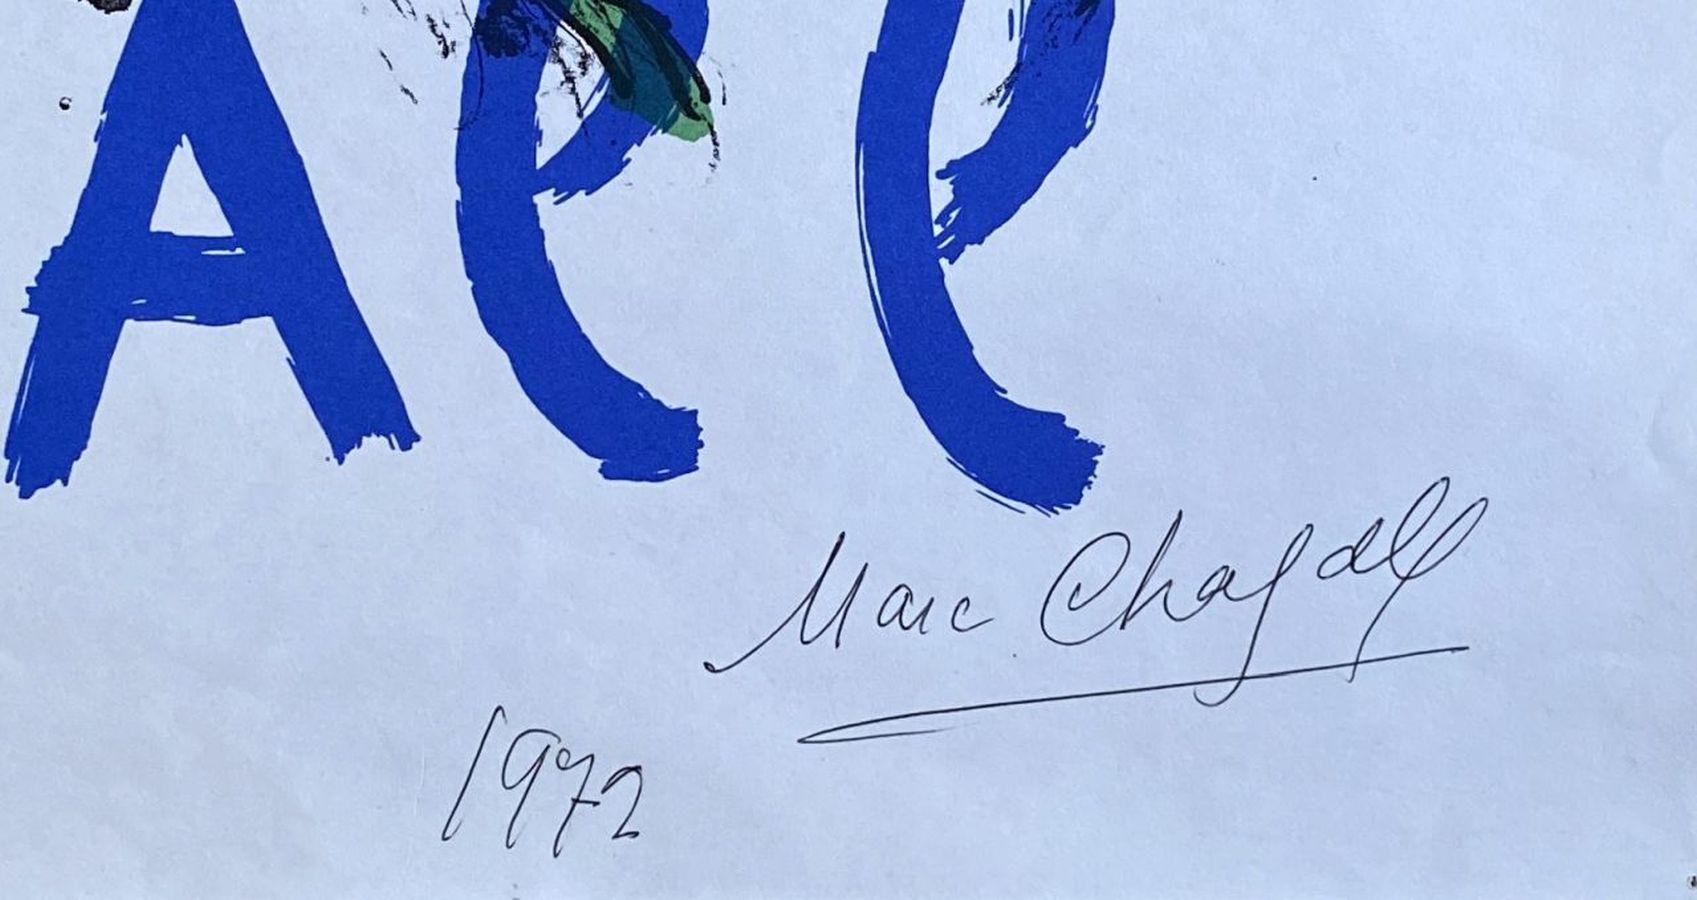 Artist Phoenix - Handsigned Original Lithograph Poster - Mourlot - Blue Figurative Print by Marc Chagall